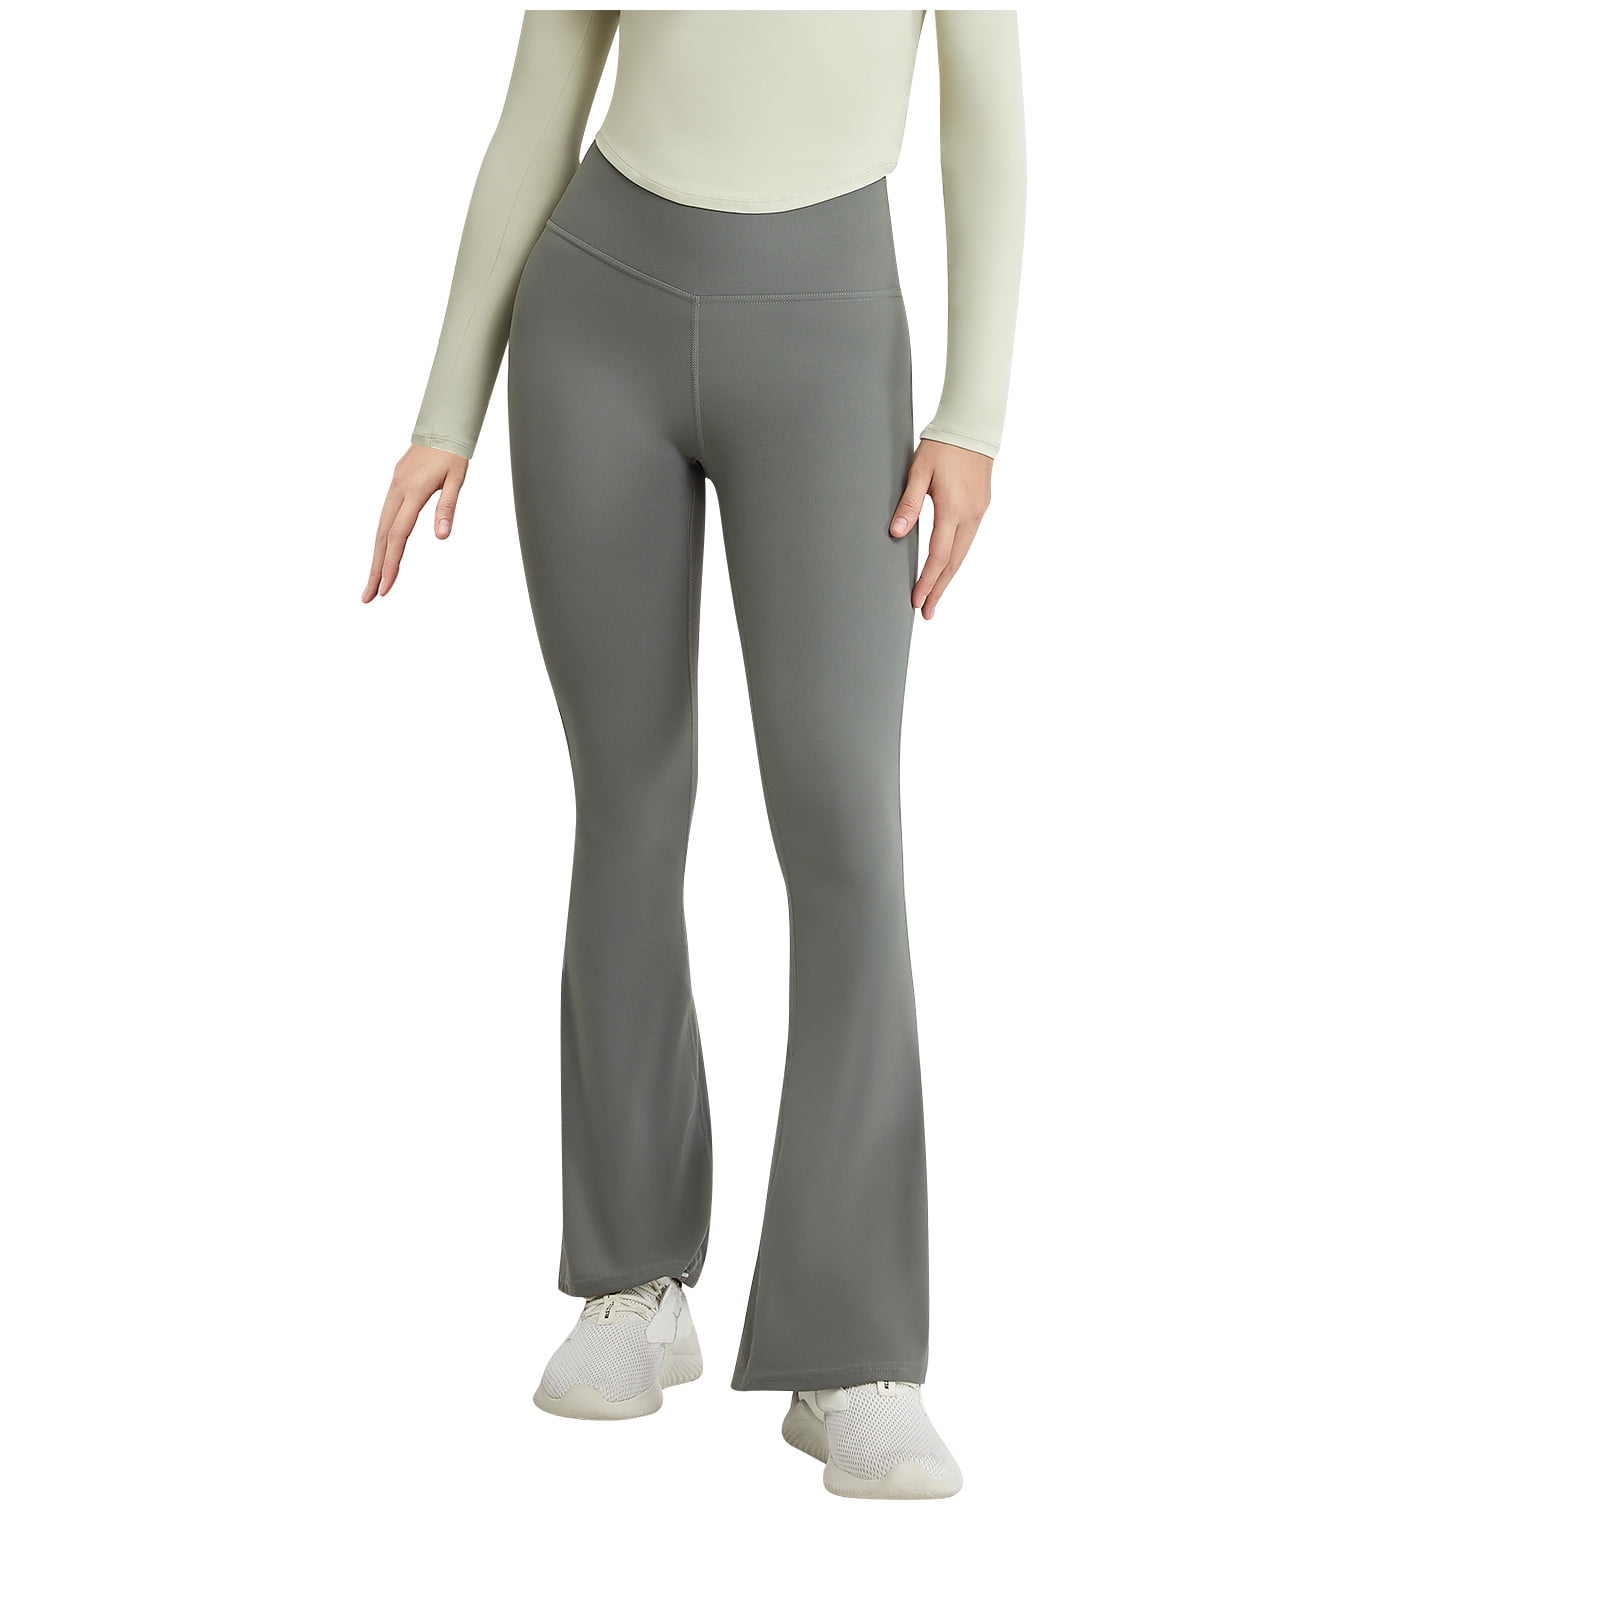 YYDGH Flare Leggings for Women Bootcut High Waisted Yoga Pants Workout  Bootleg Pants Dark Gray XL 